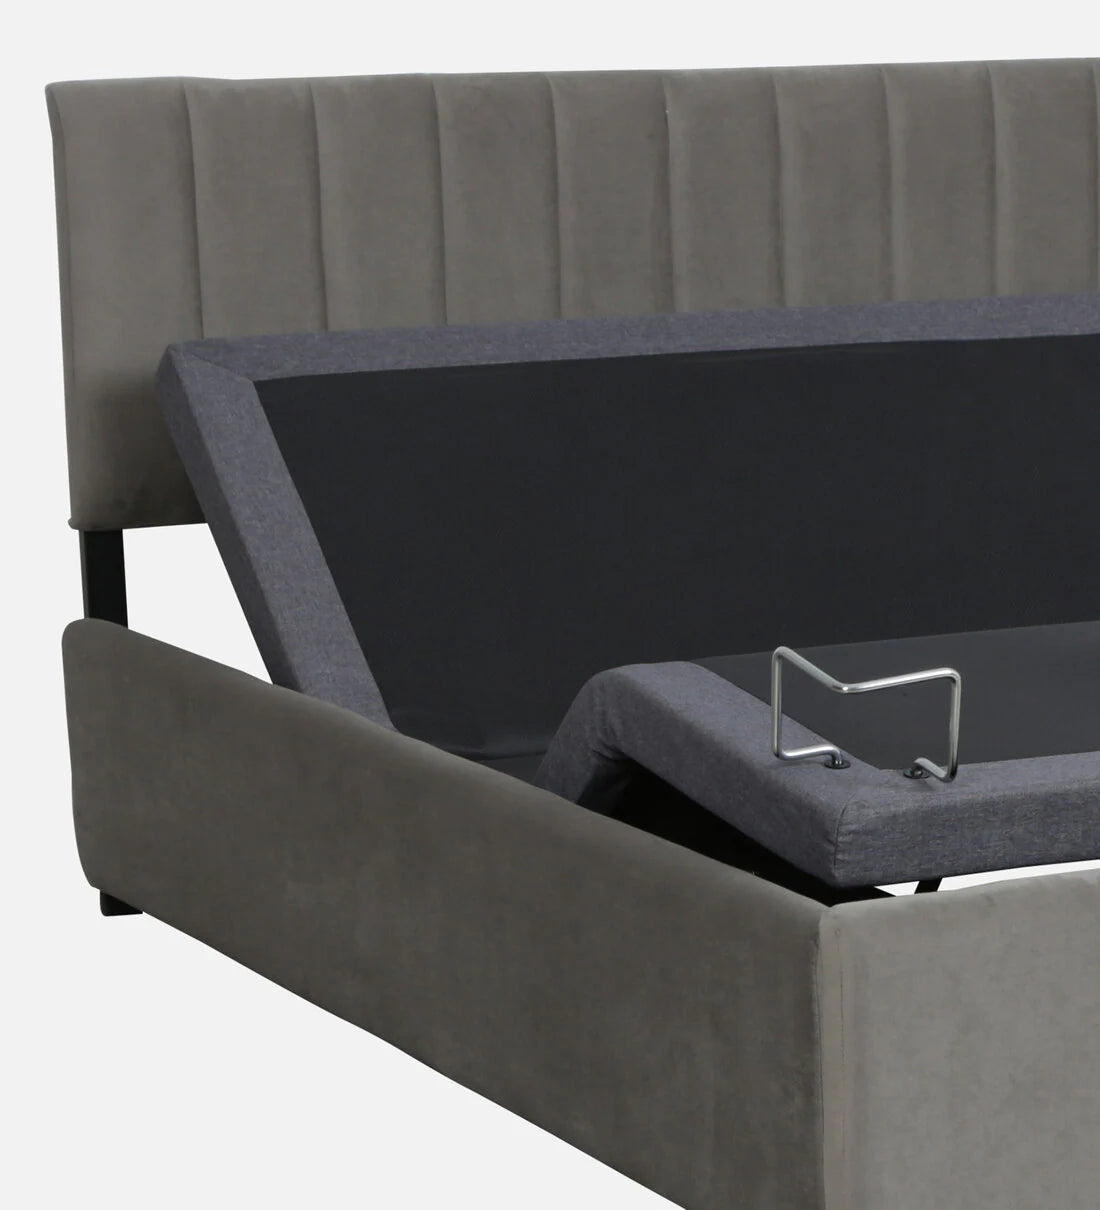 Aliba King Size Smart Bed in Italia Grey Colour With Remote